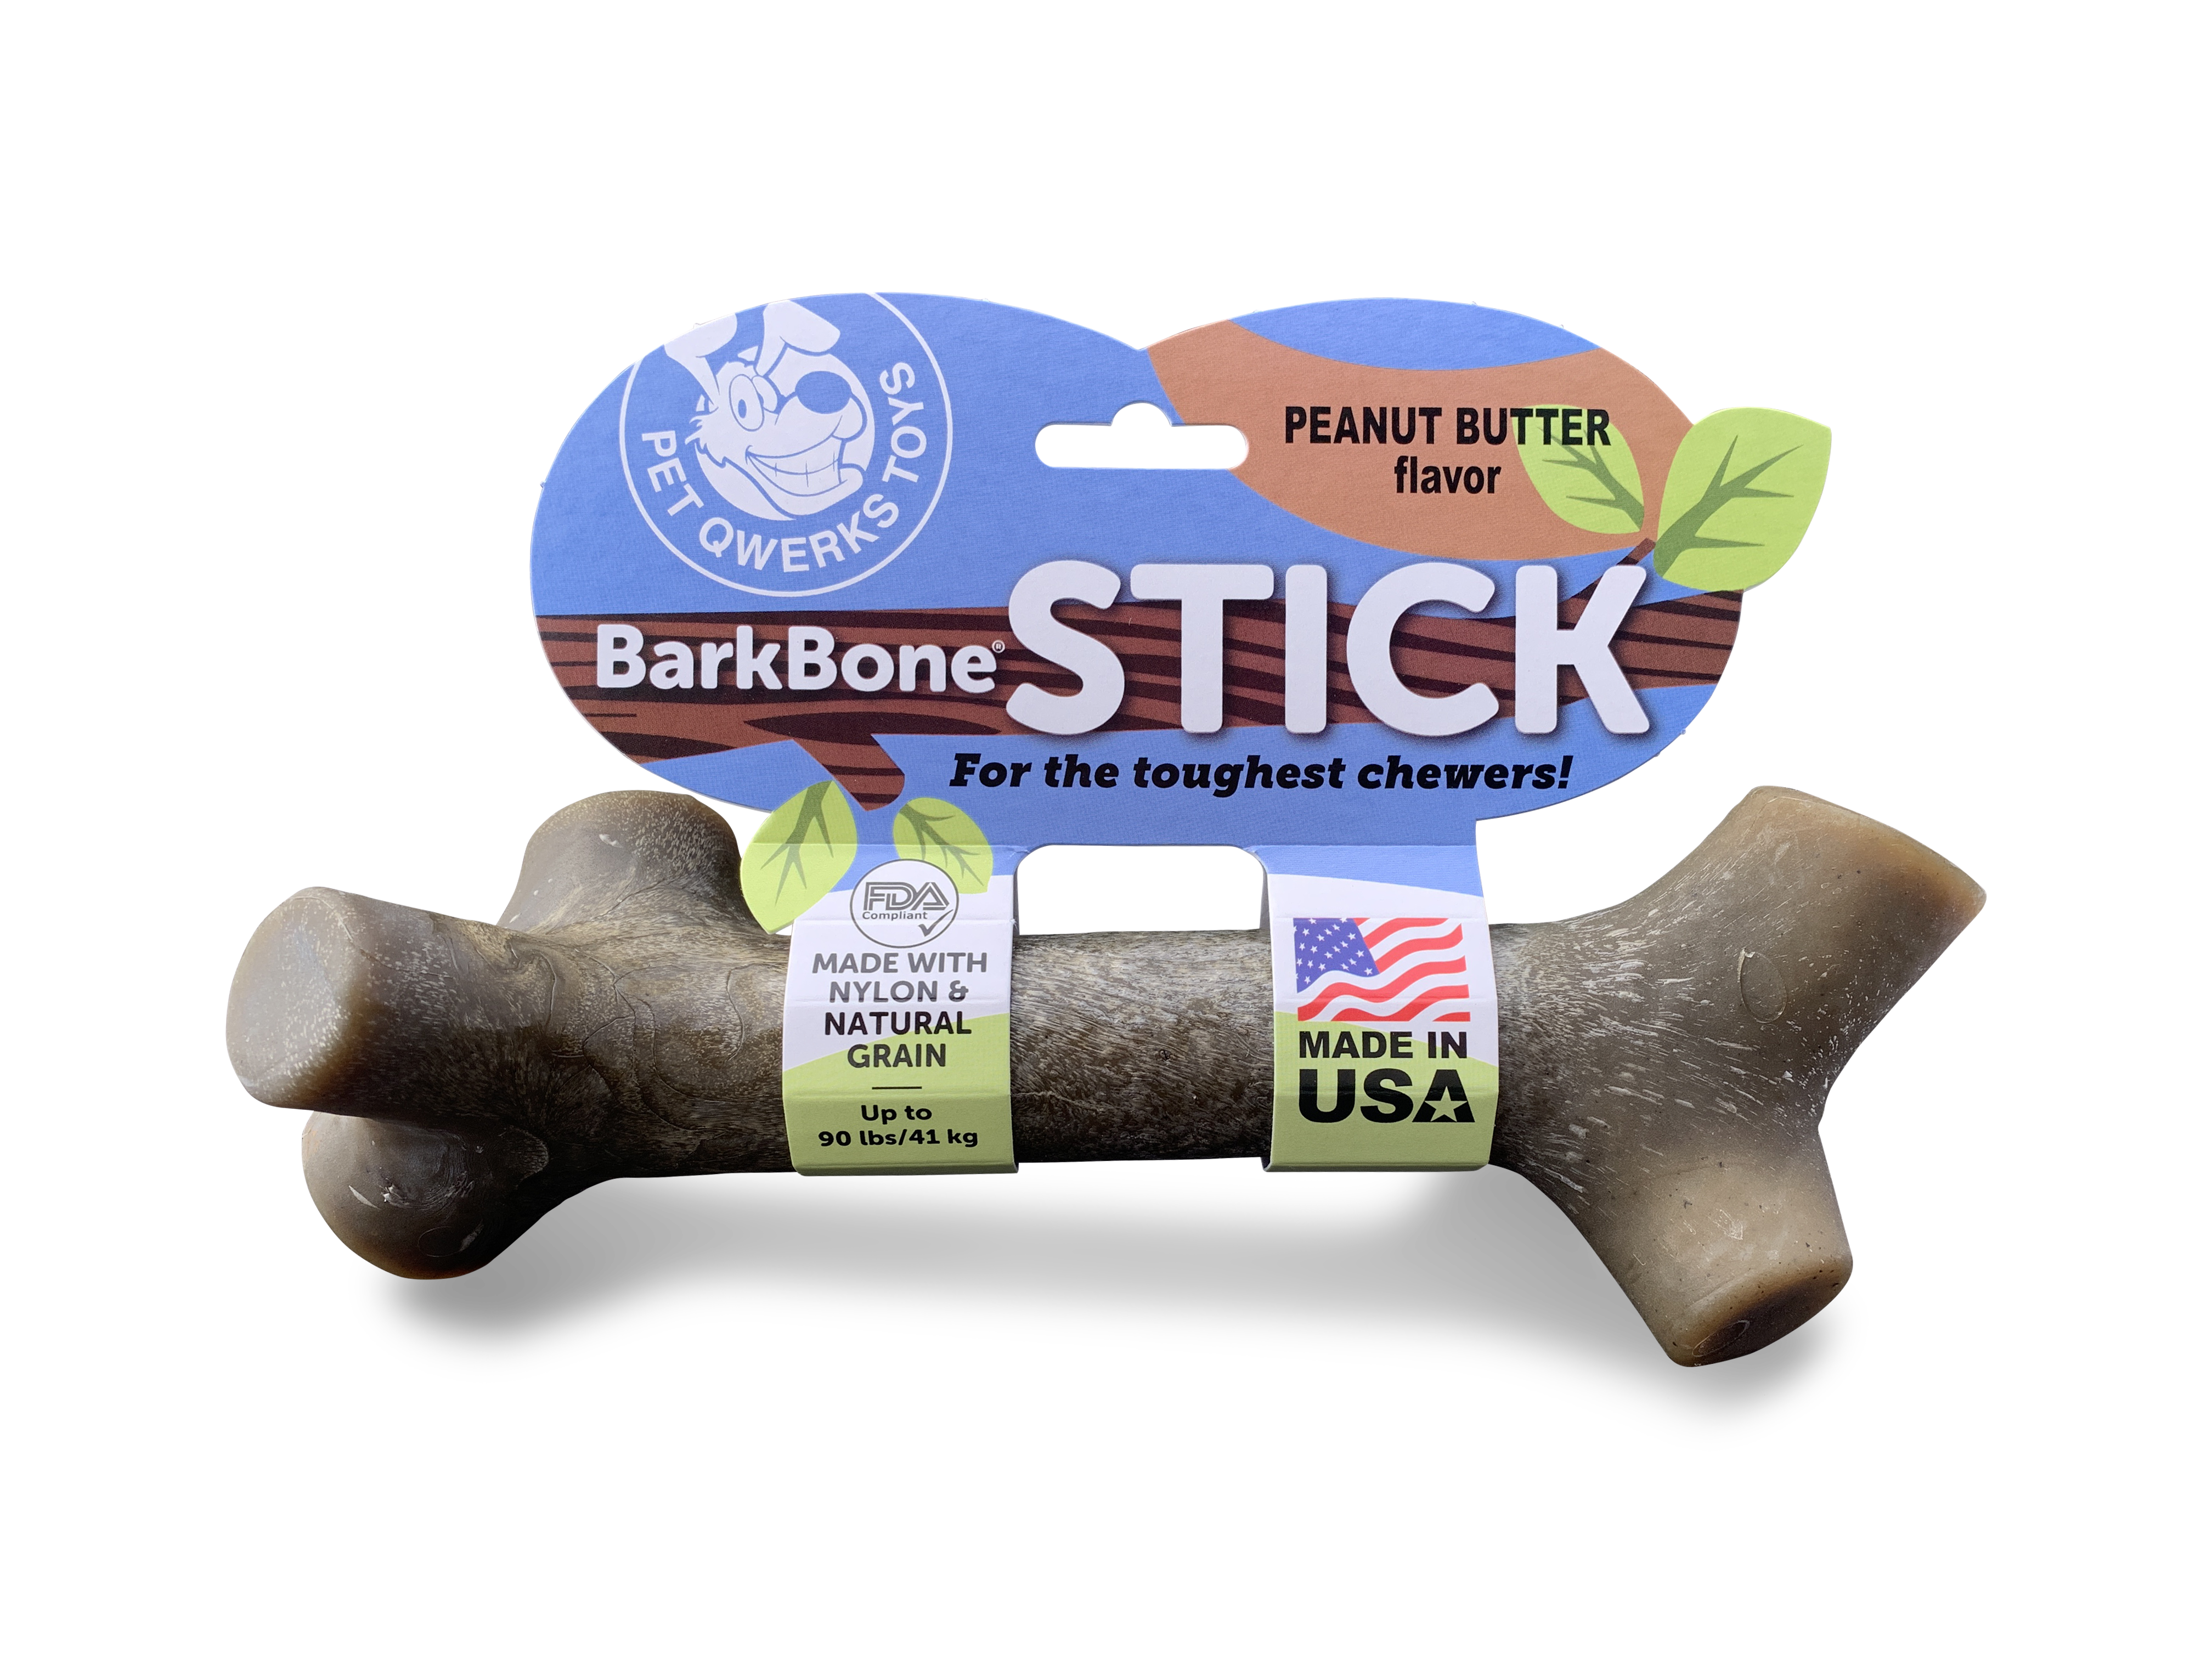 Are bark bones good for dogs